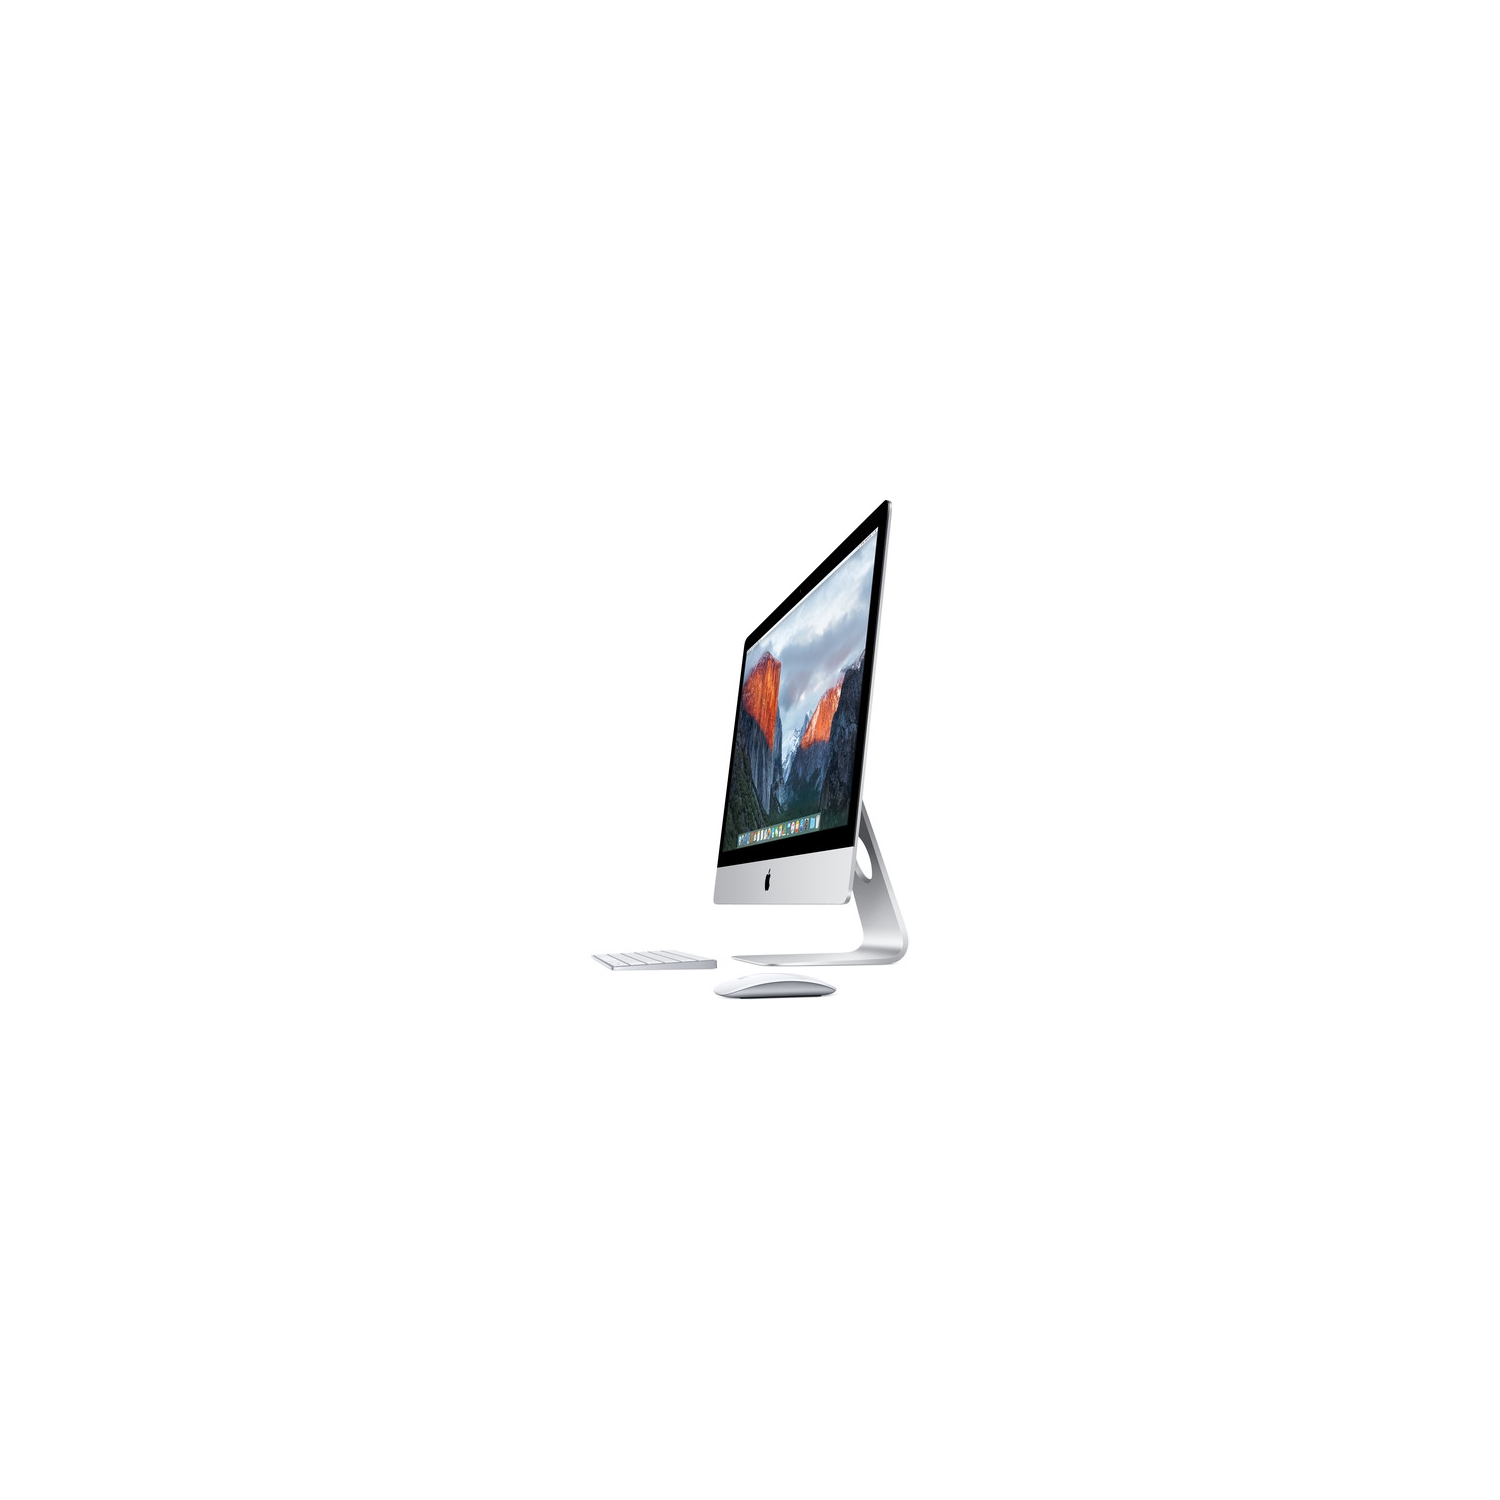 Refurbished (Good) - Apple iMac (Retina 5K, 27-inch, Late 2015 